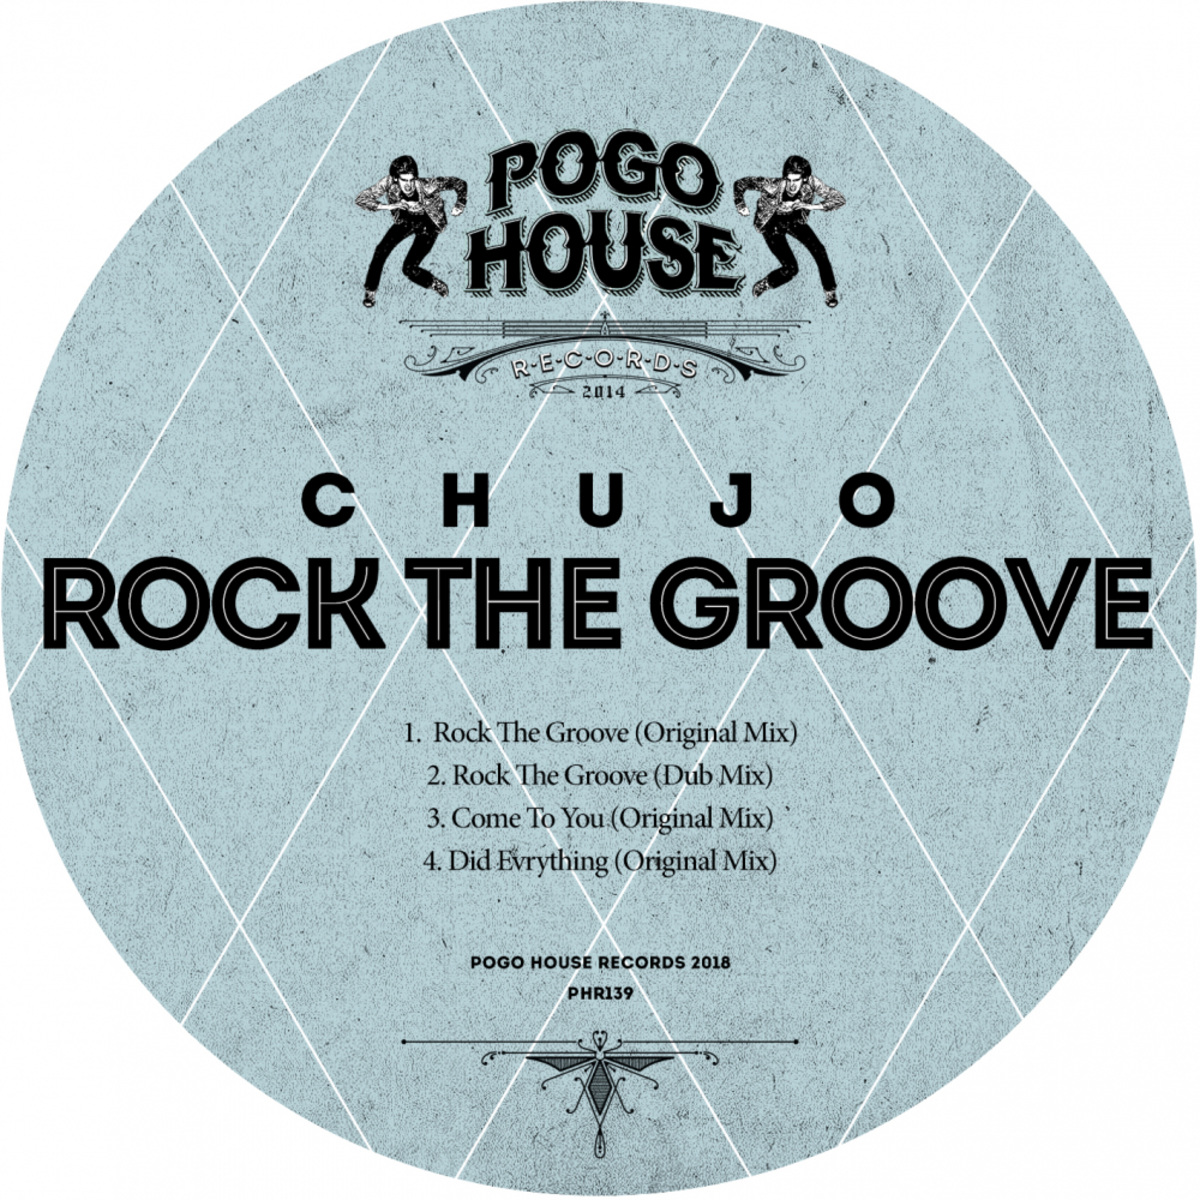 Chujo - Rock The Groove / Pogo House Records